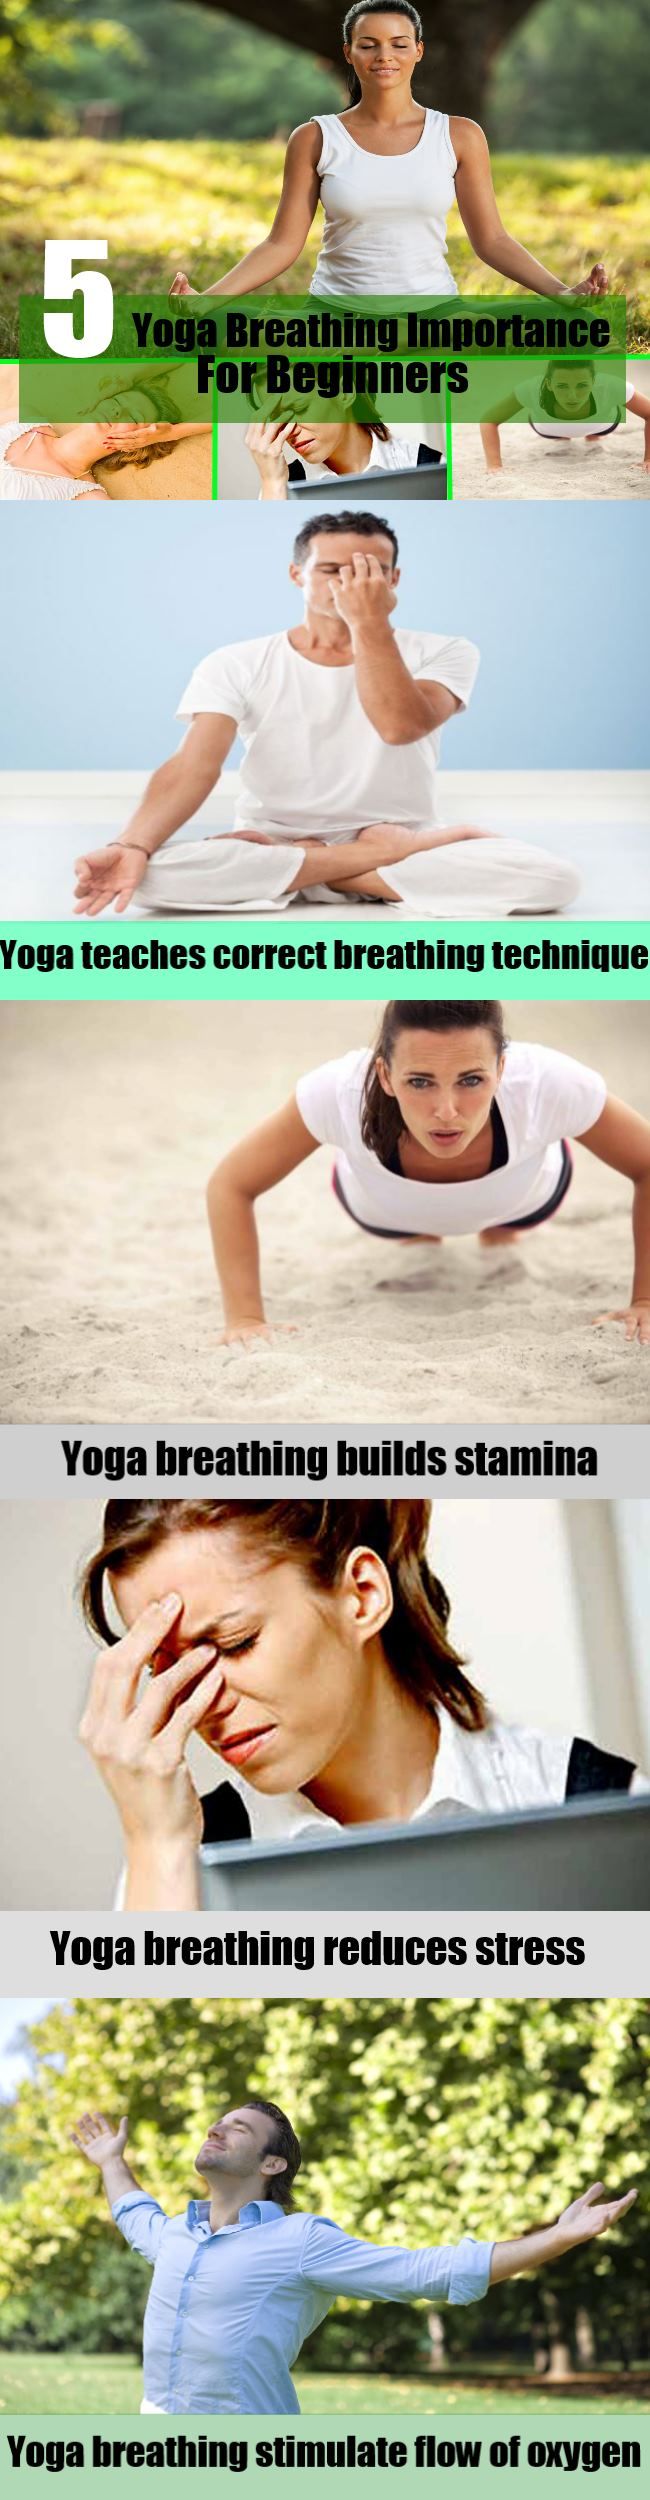 importance de la respiration de yoga